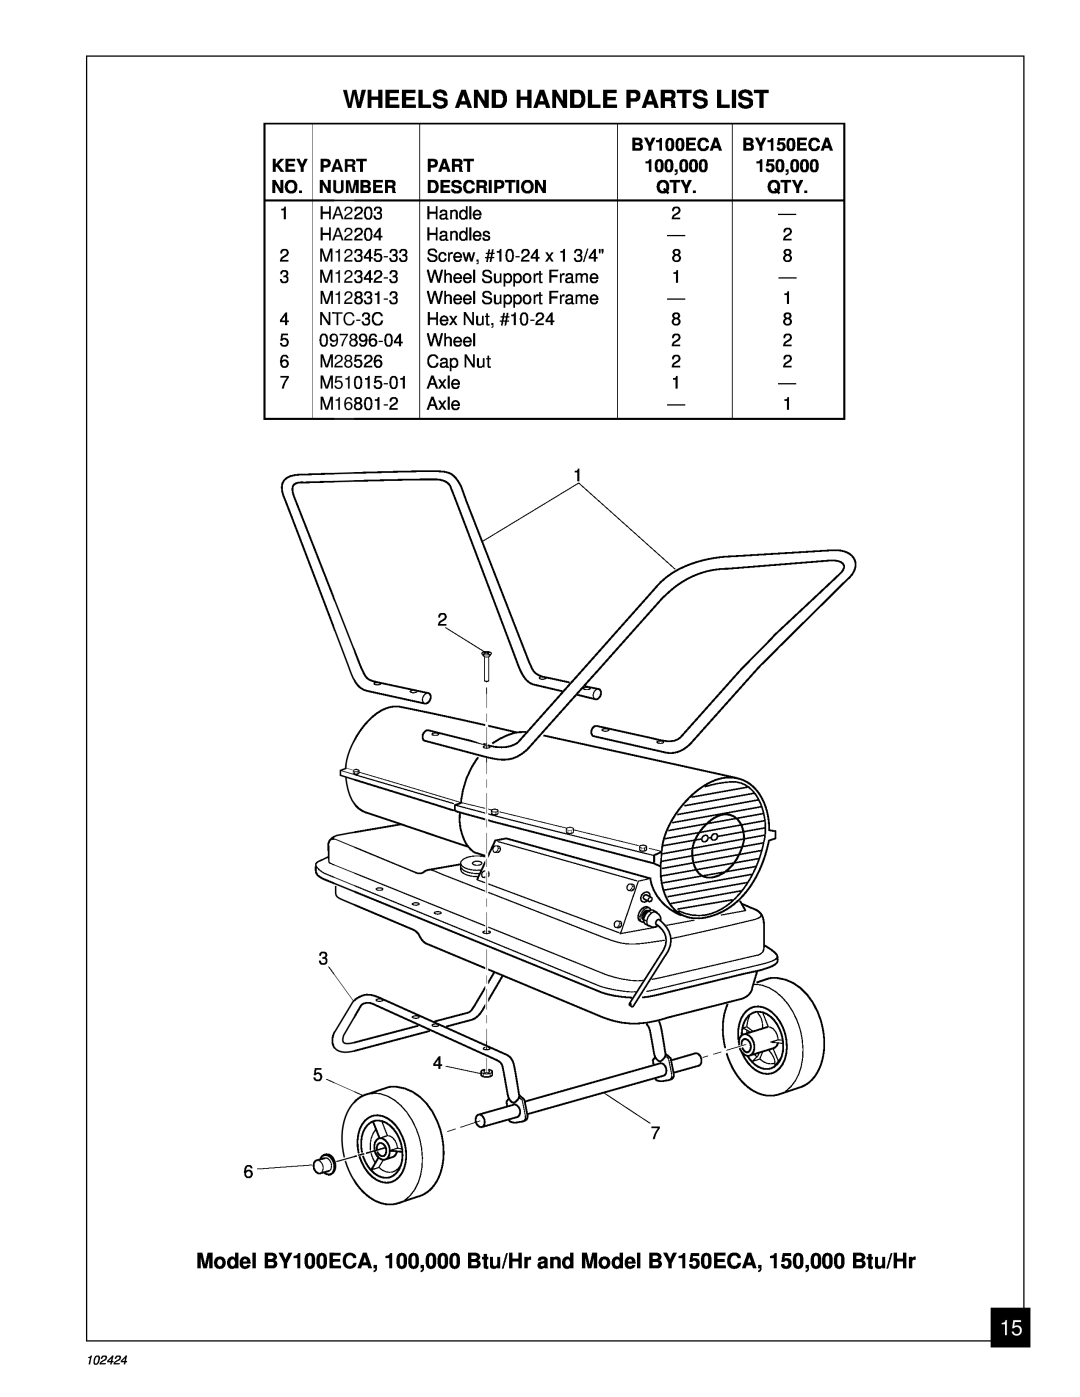 Desa BY150ECA owner manual Wheels And Handle Parts List, BY100ECA, 100,000, 150,000, Number, Description 